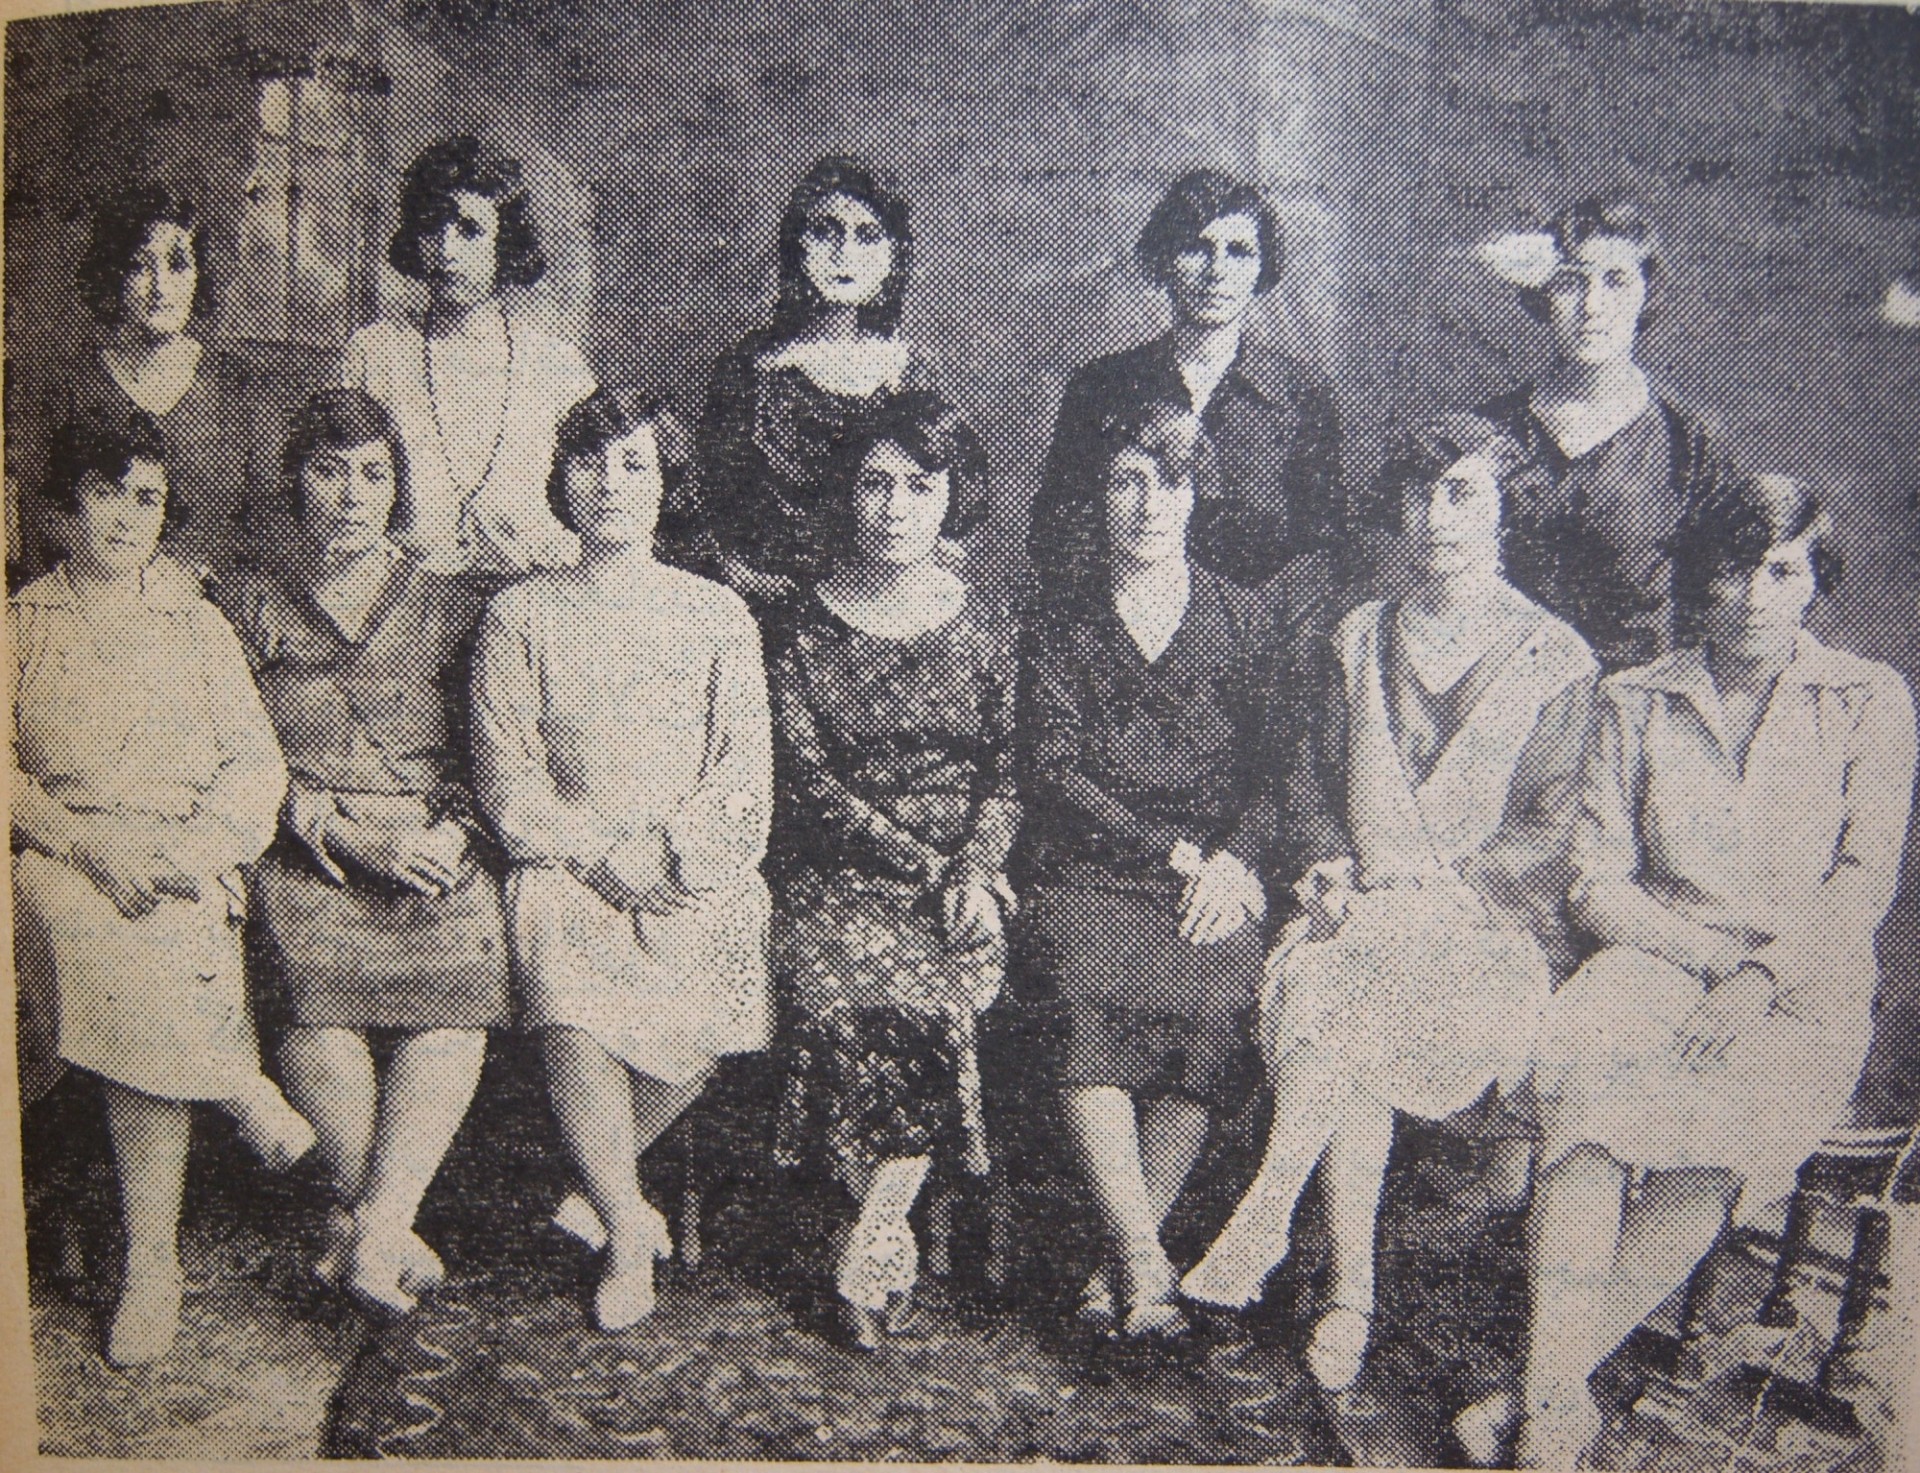 Board of directors of Jam'iyat-e Nesvan-e Vatankhah, a women's right association in Tehran (1923-1933). Source: Wikimedia Commons, Public domain.